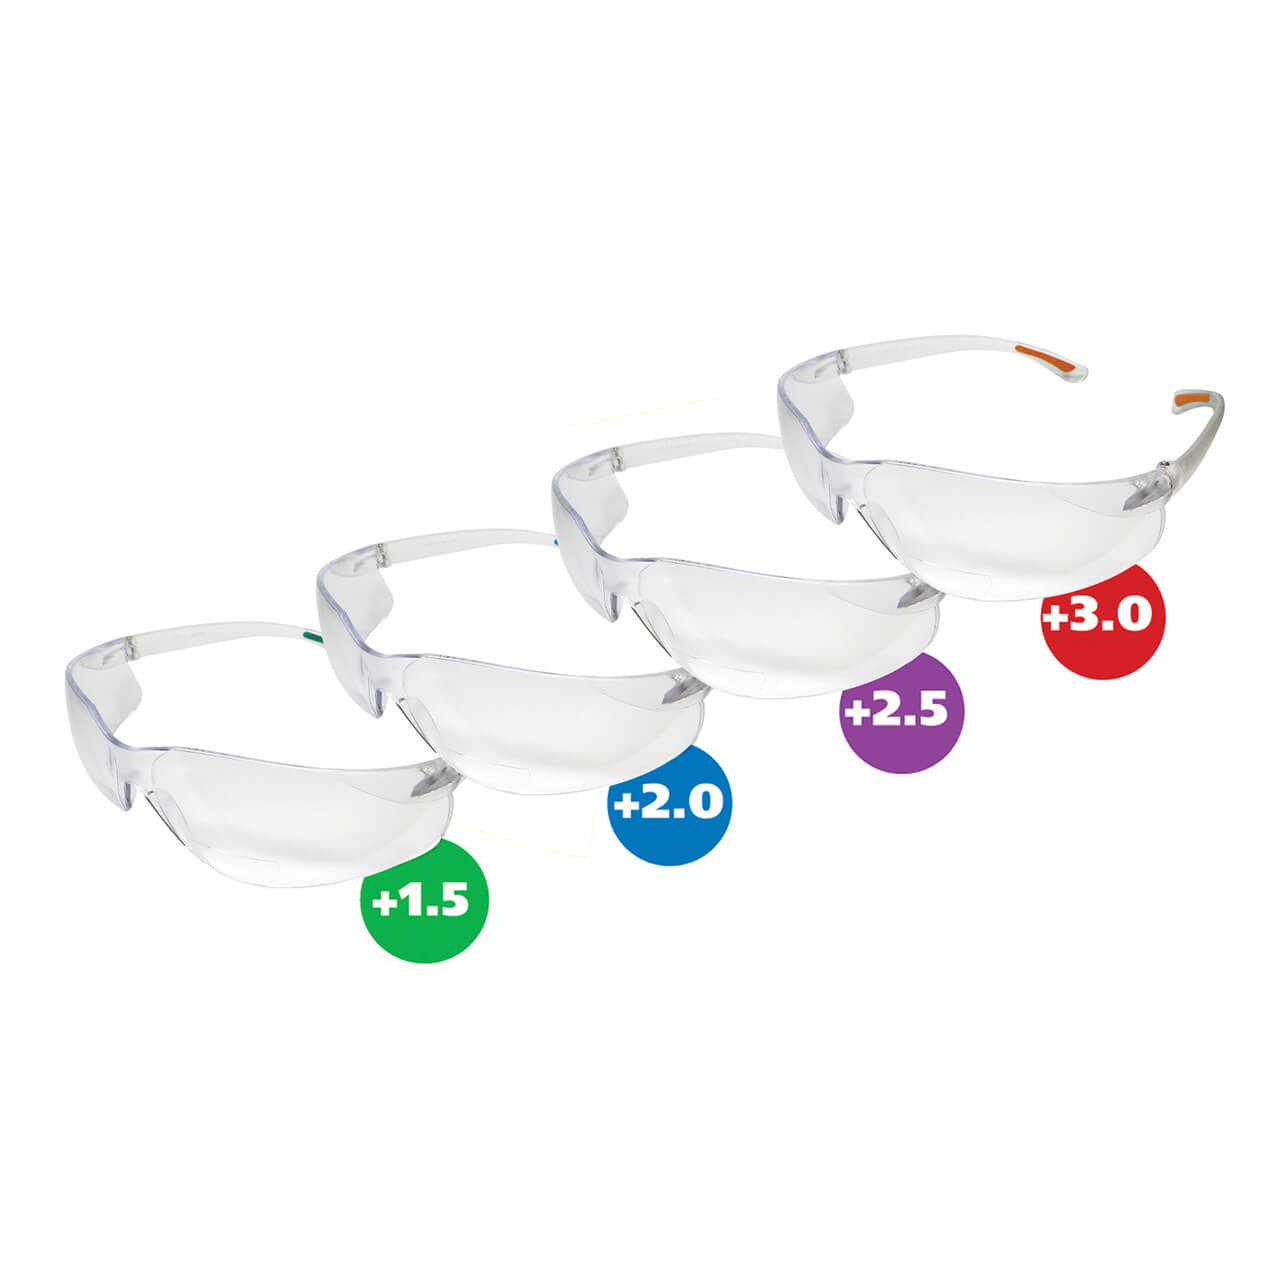 2.5 Bifocal Safety Glasses